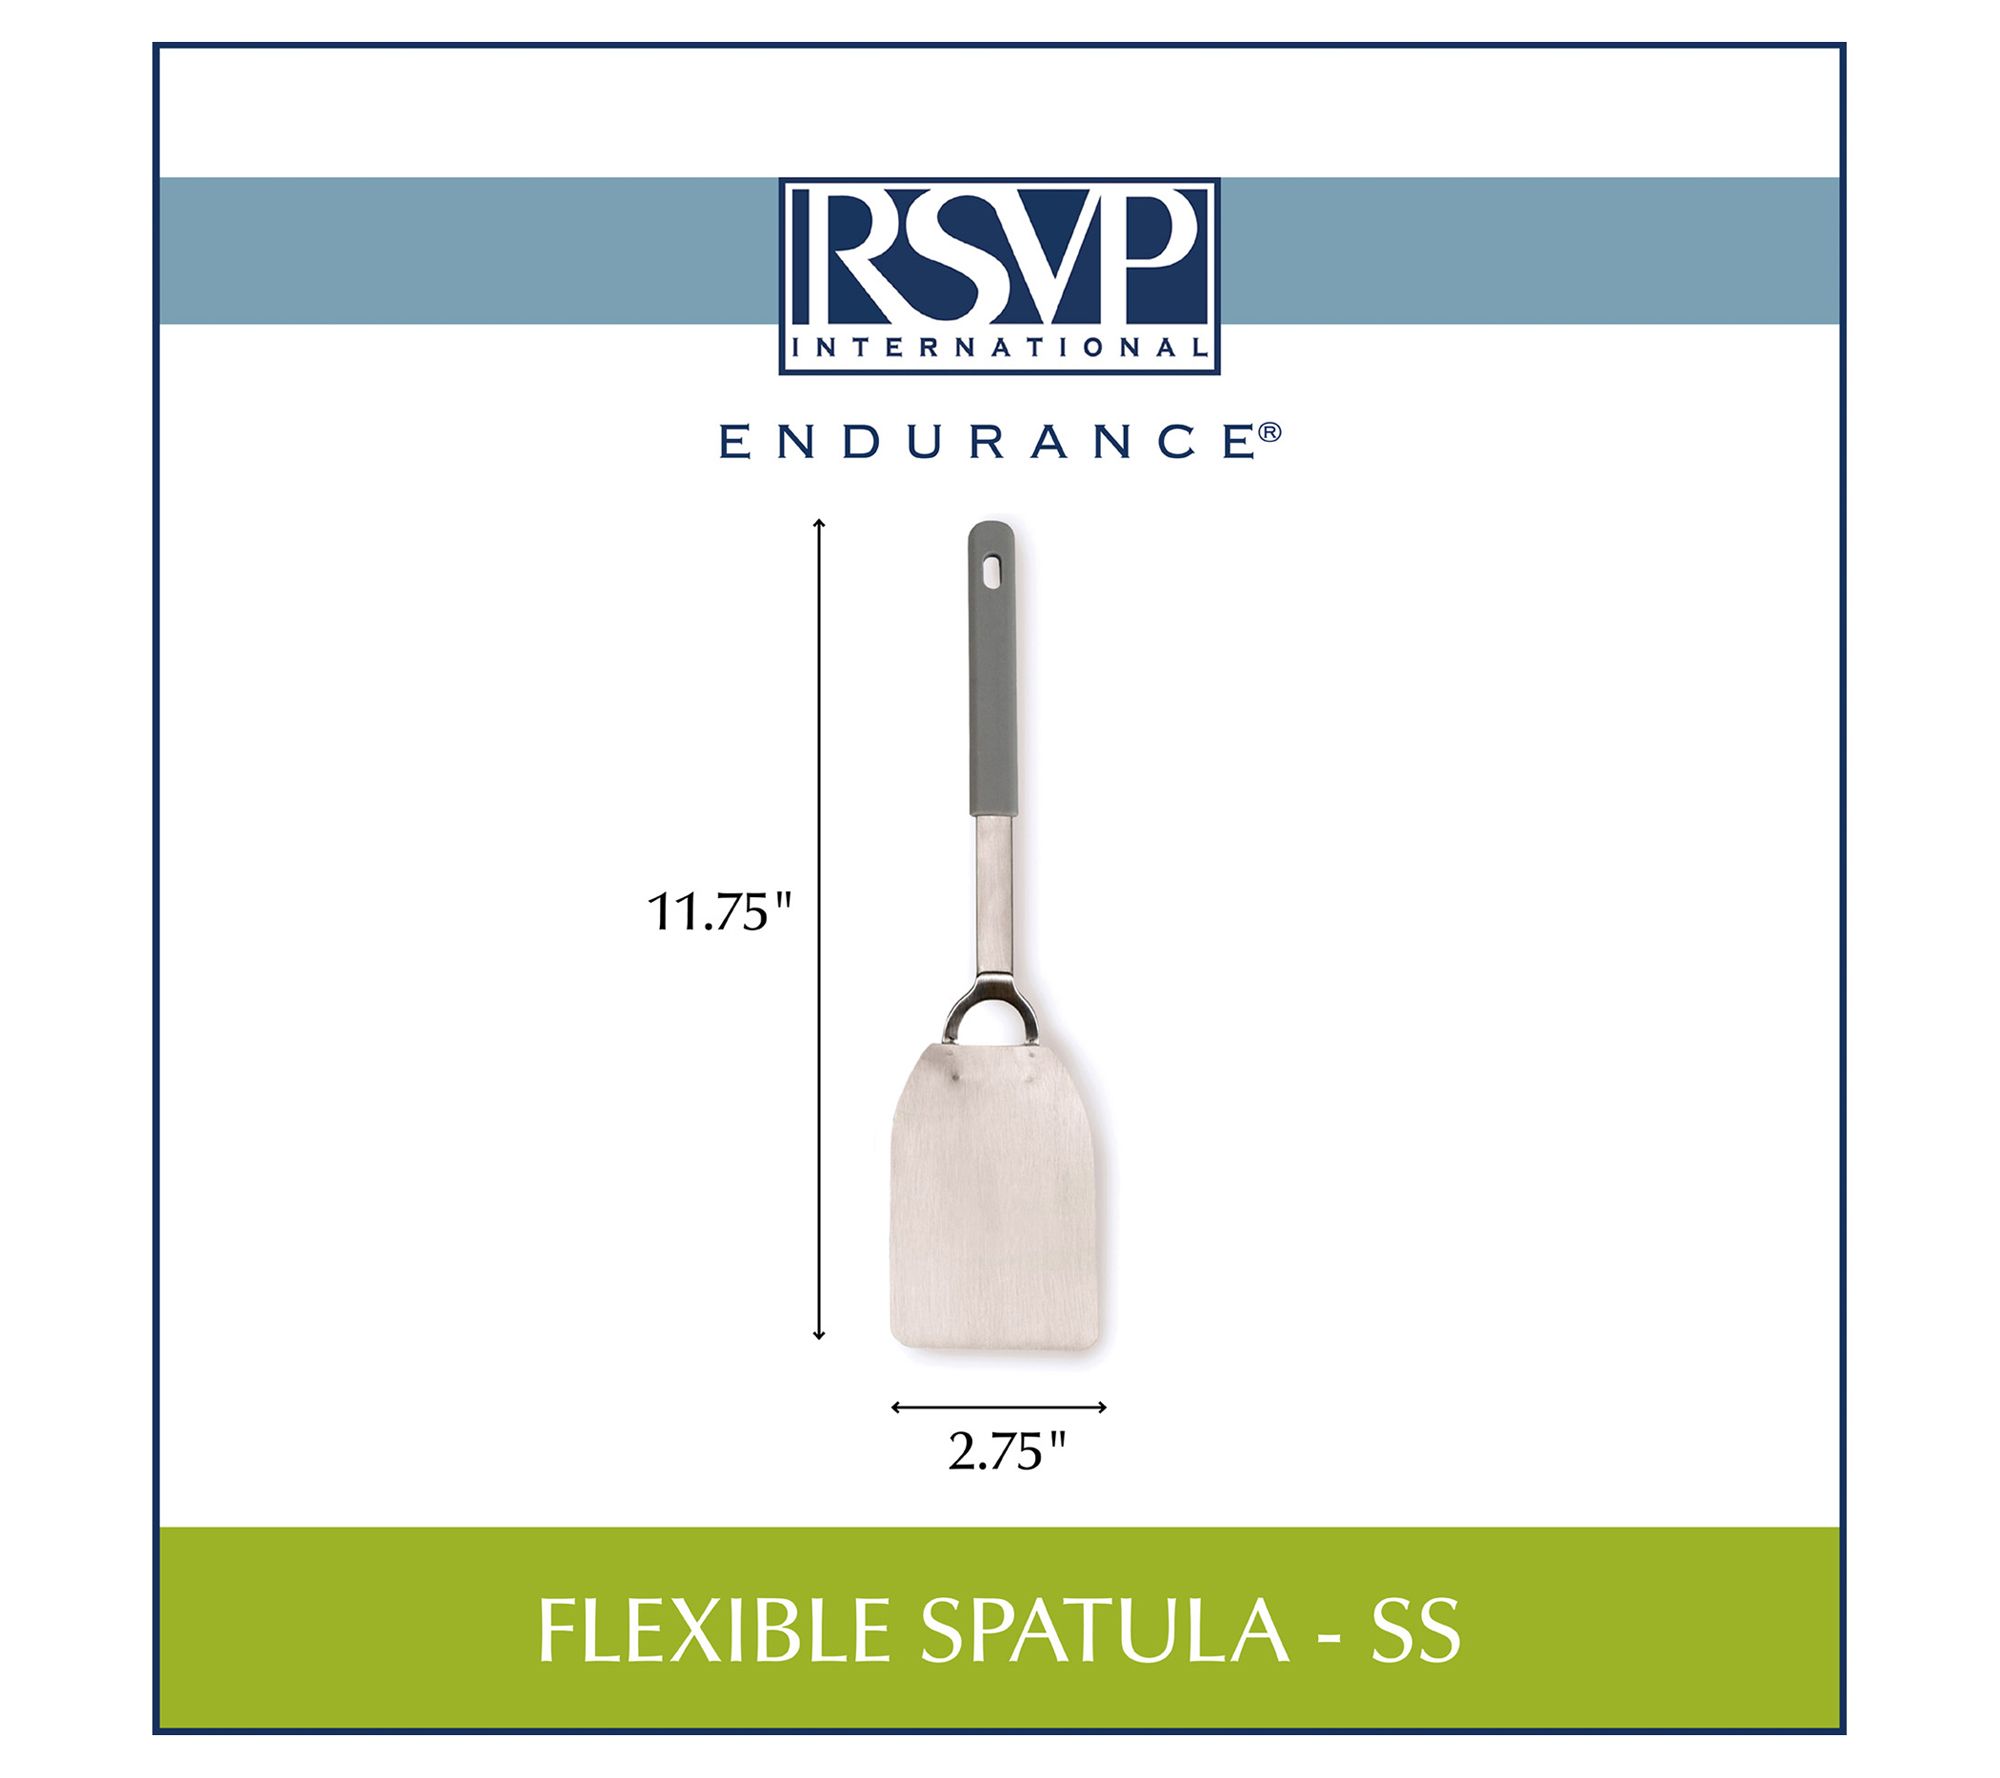 European Flexible Nonstick Spatula - Black, RSVP